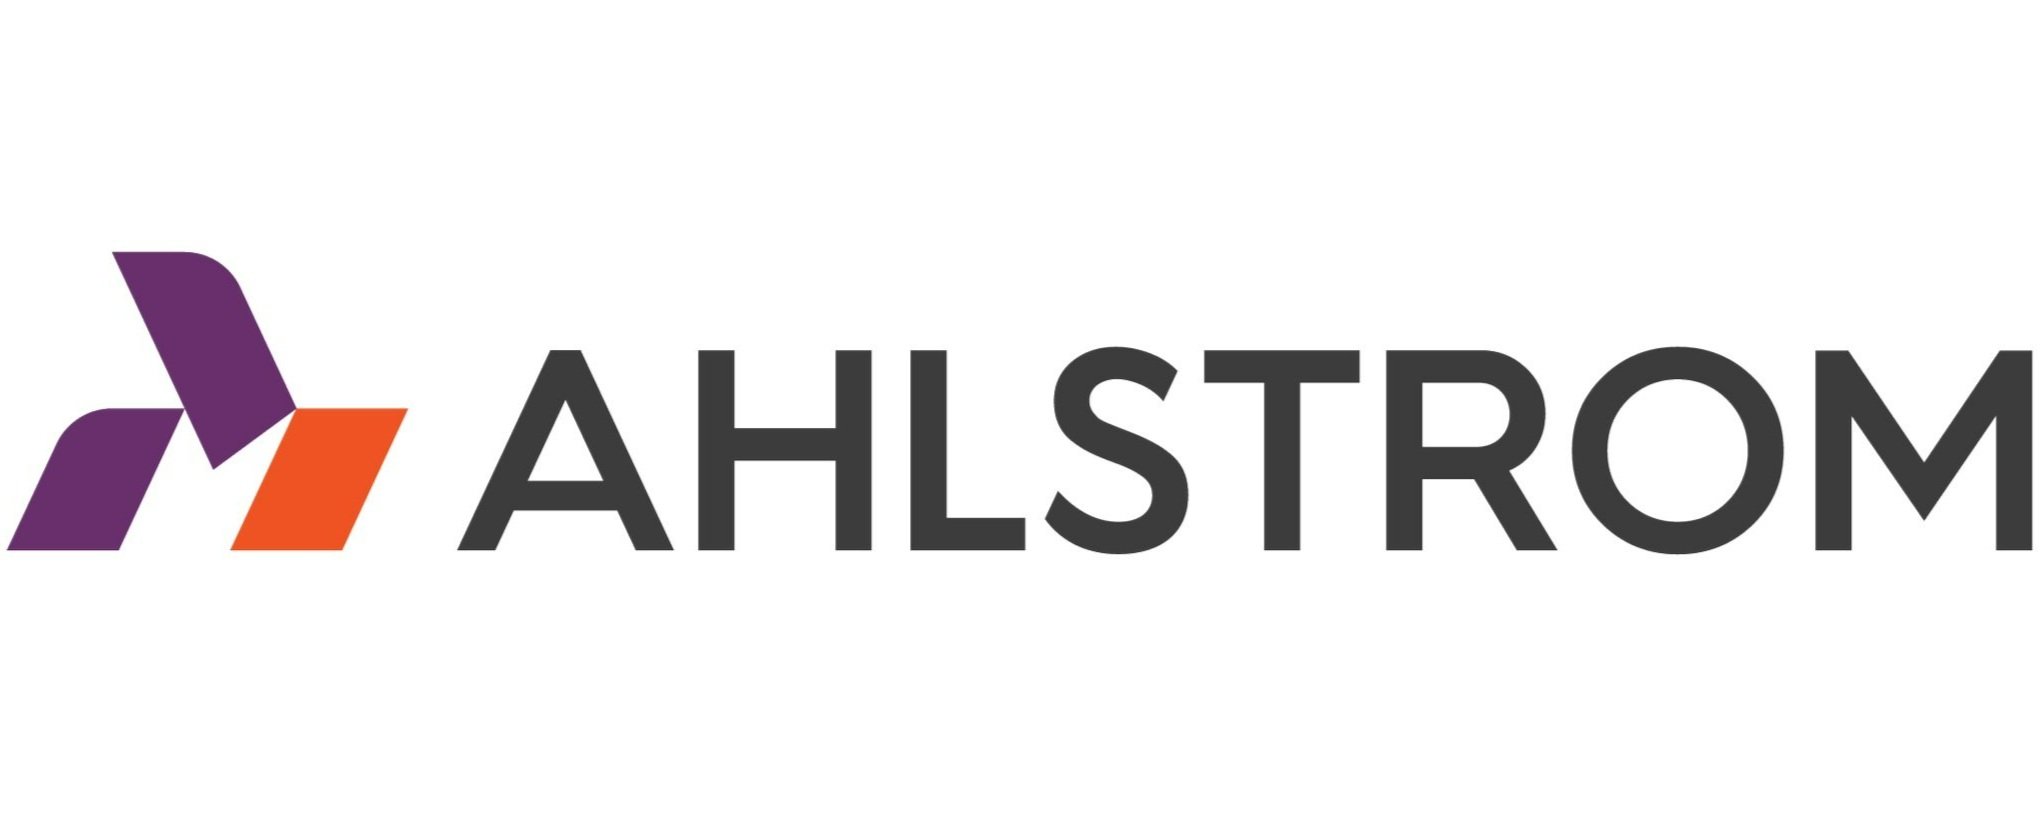 Ahlstrom_logo_PRIMARY_RGB.jpg